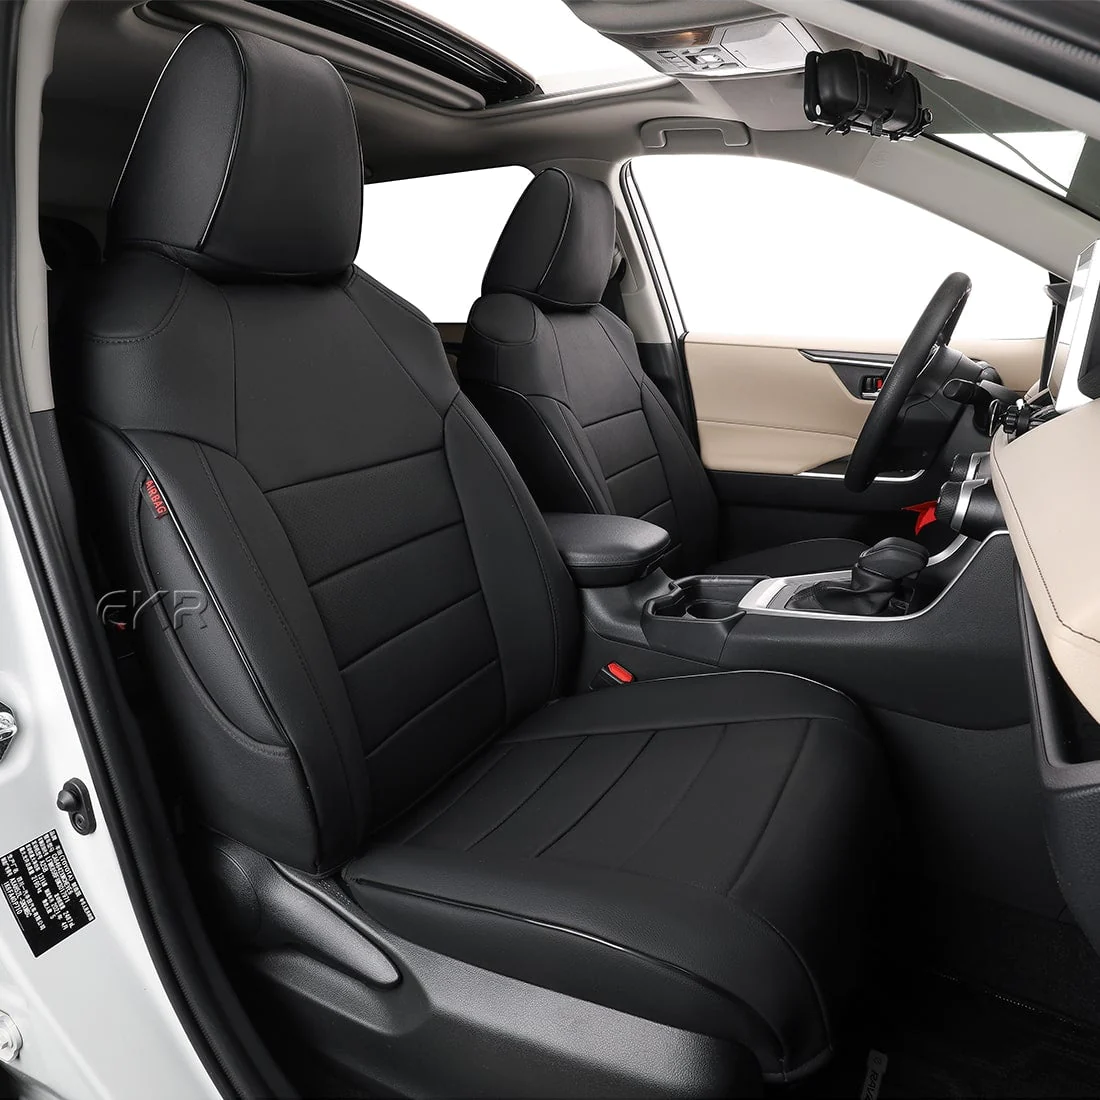 إنفينيتي M35 interior - Seats